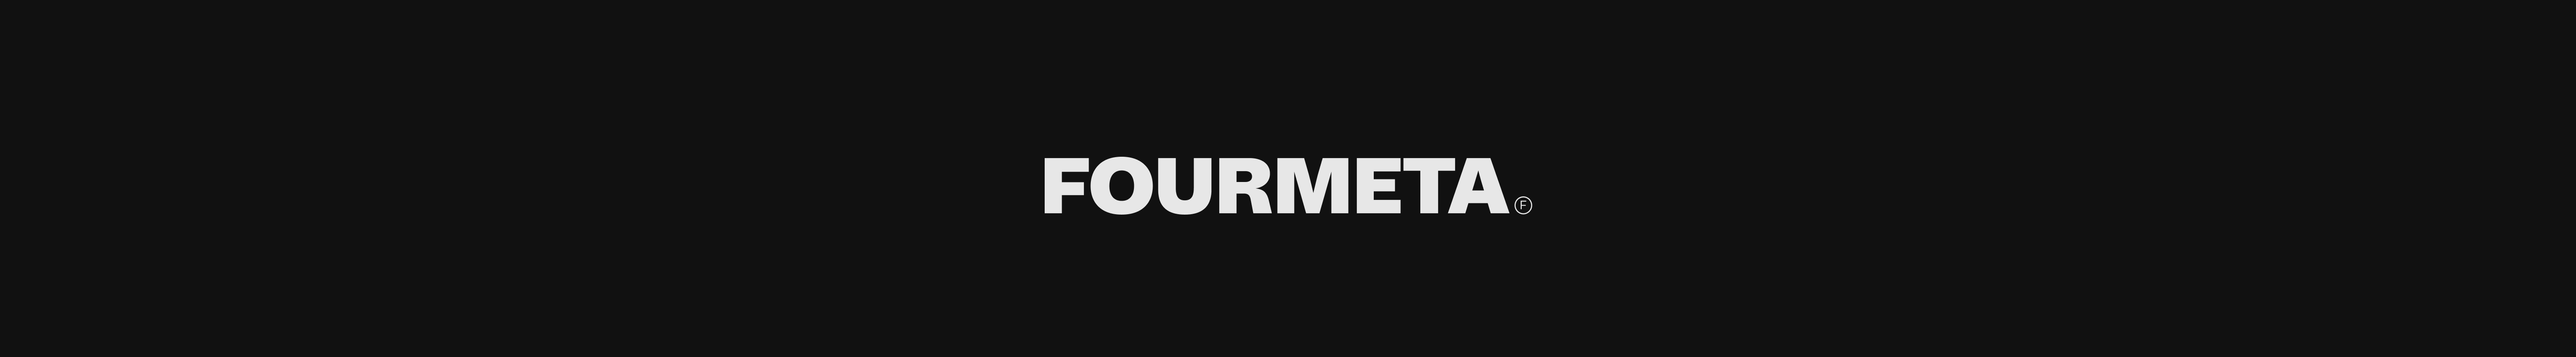 Fourmeta Digital's profile banner